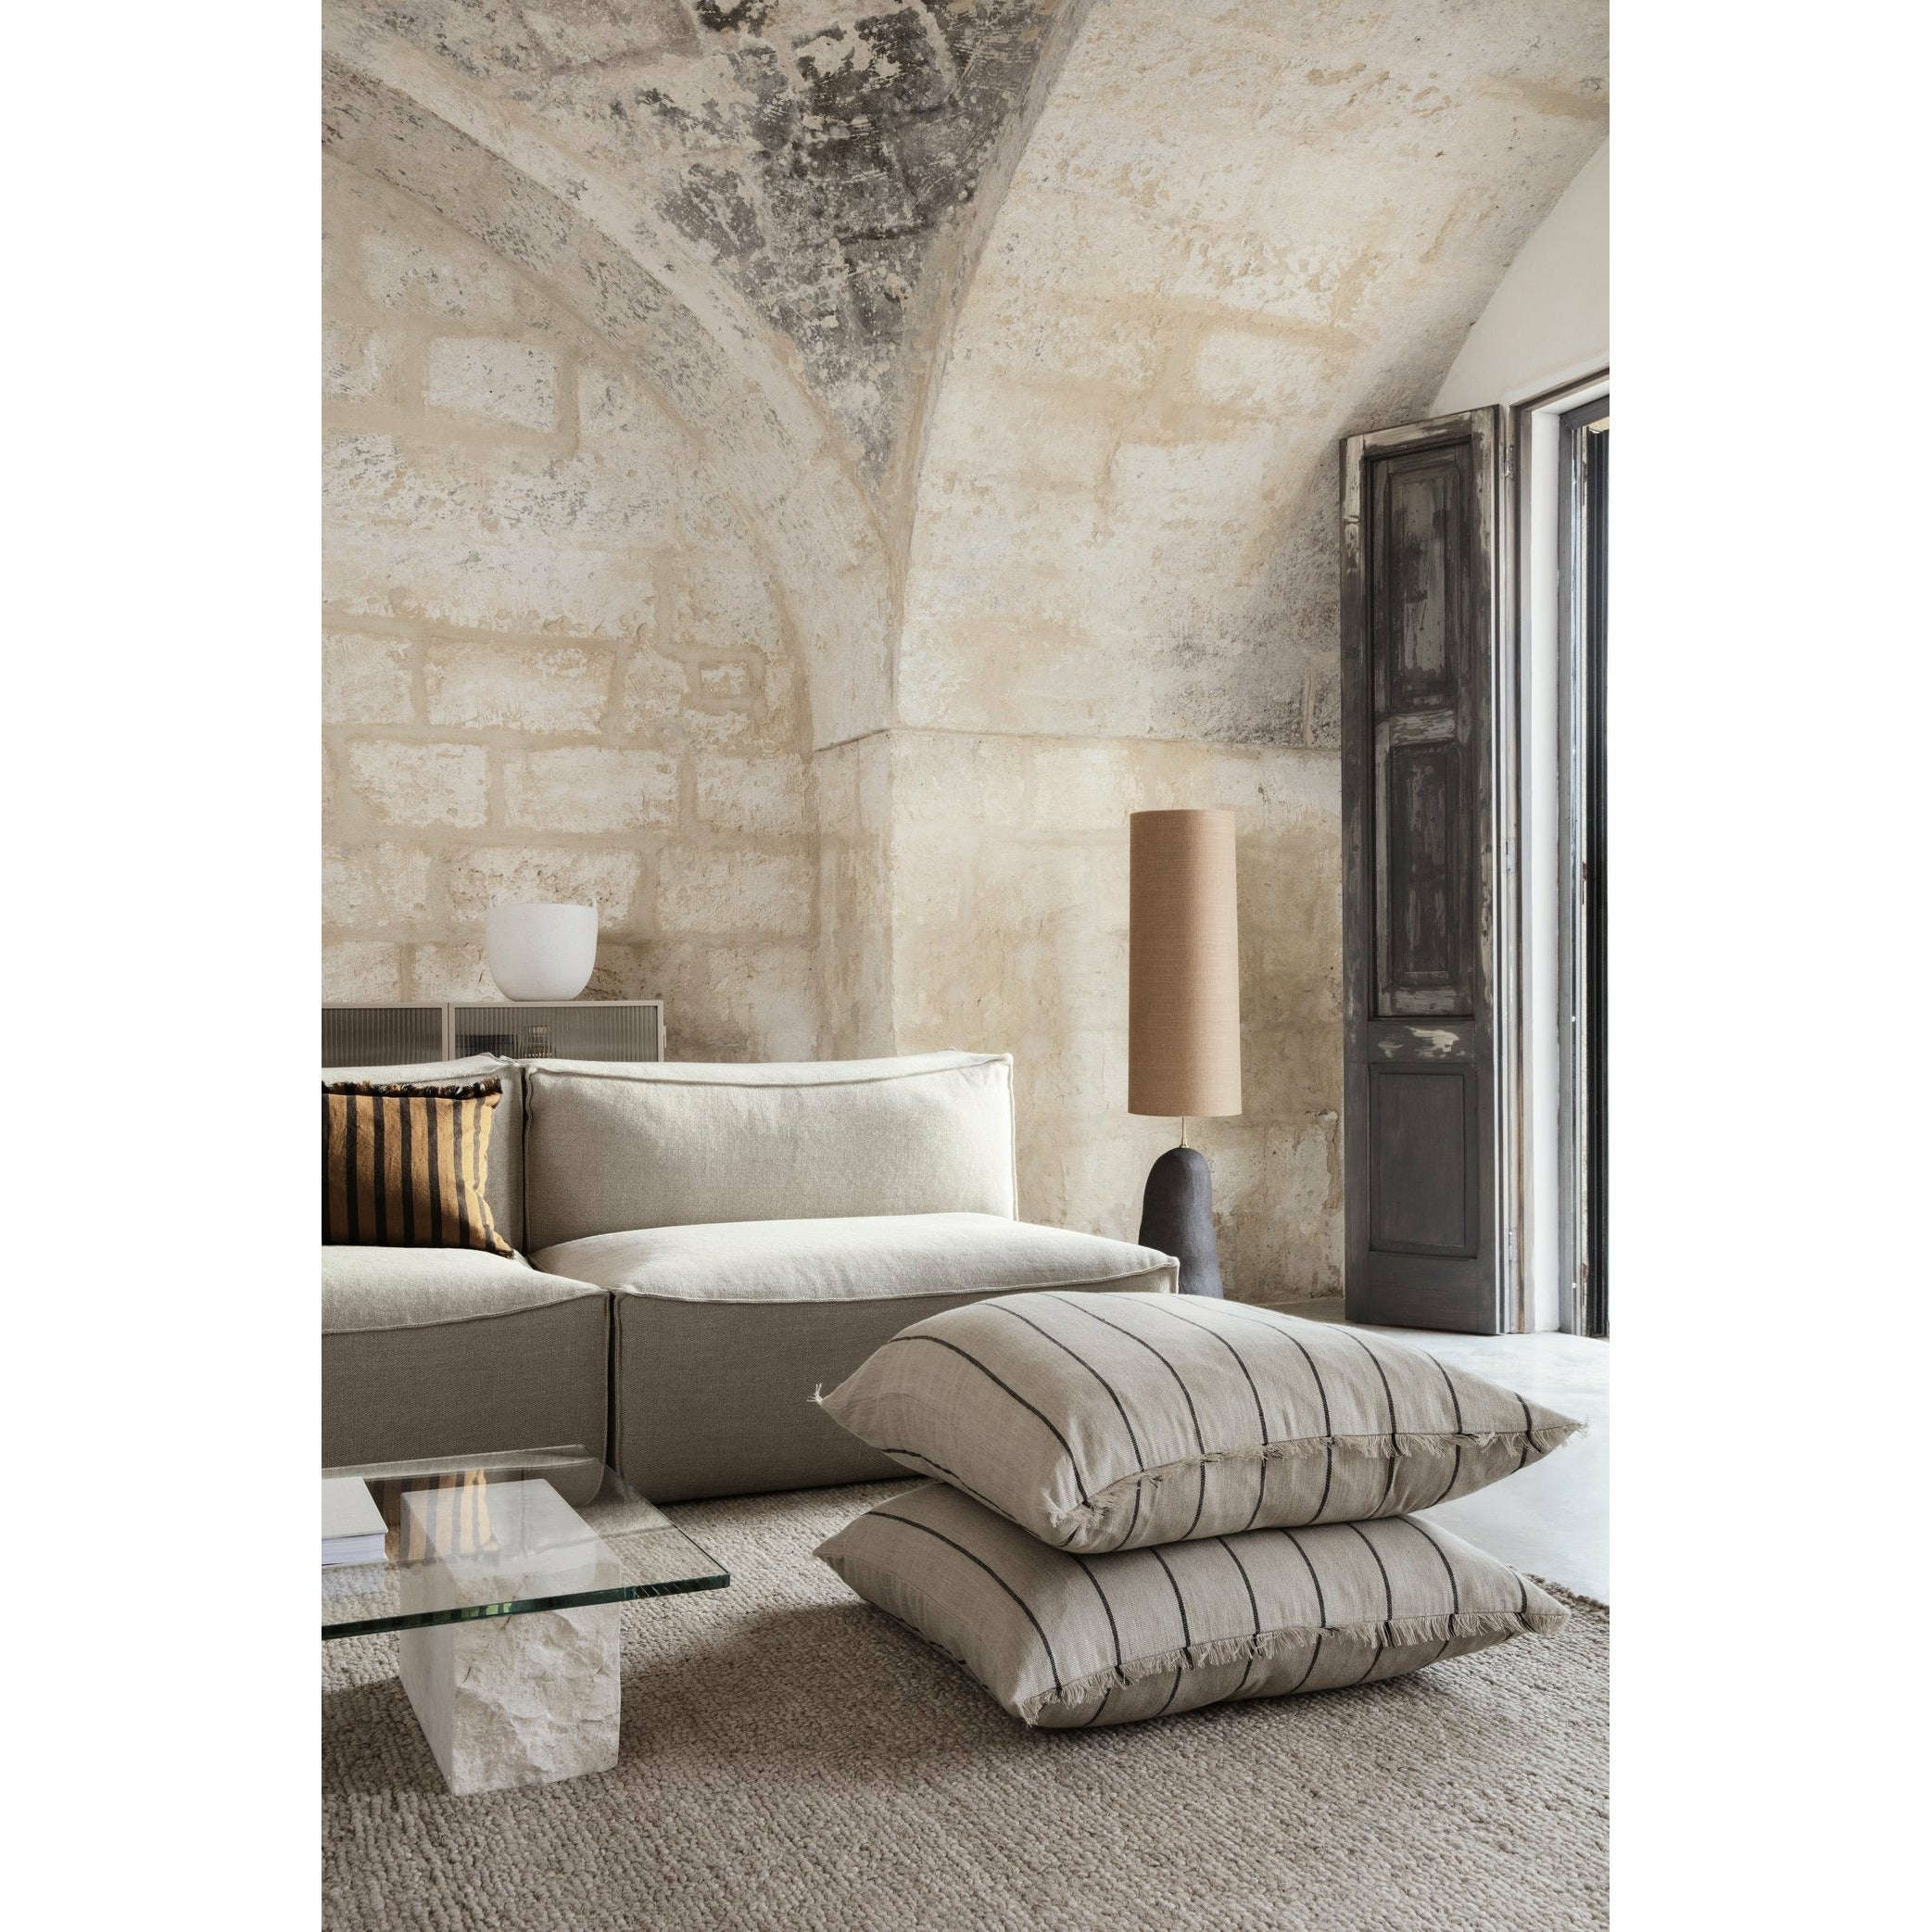 Ferm Living Catena Sofa Armrest Right S401 Cotton Linen, Natural